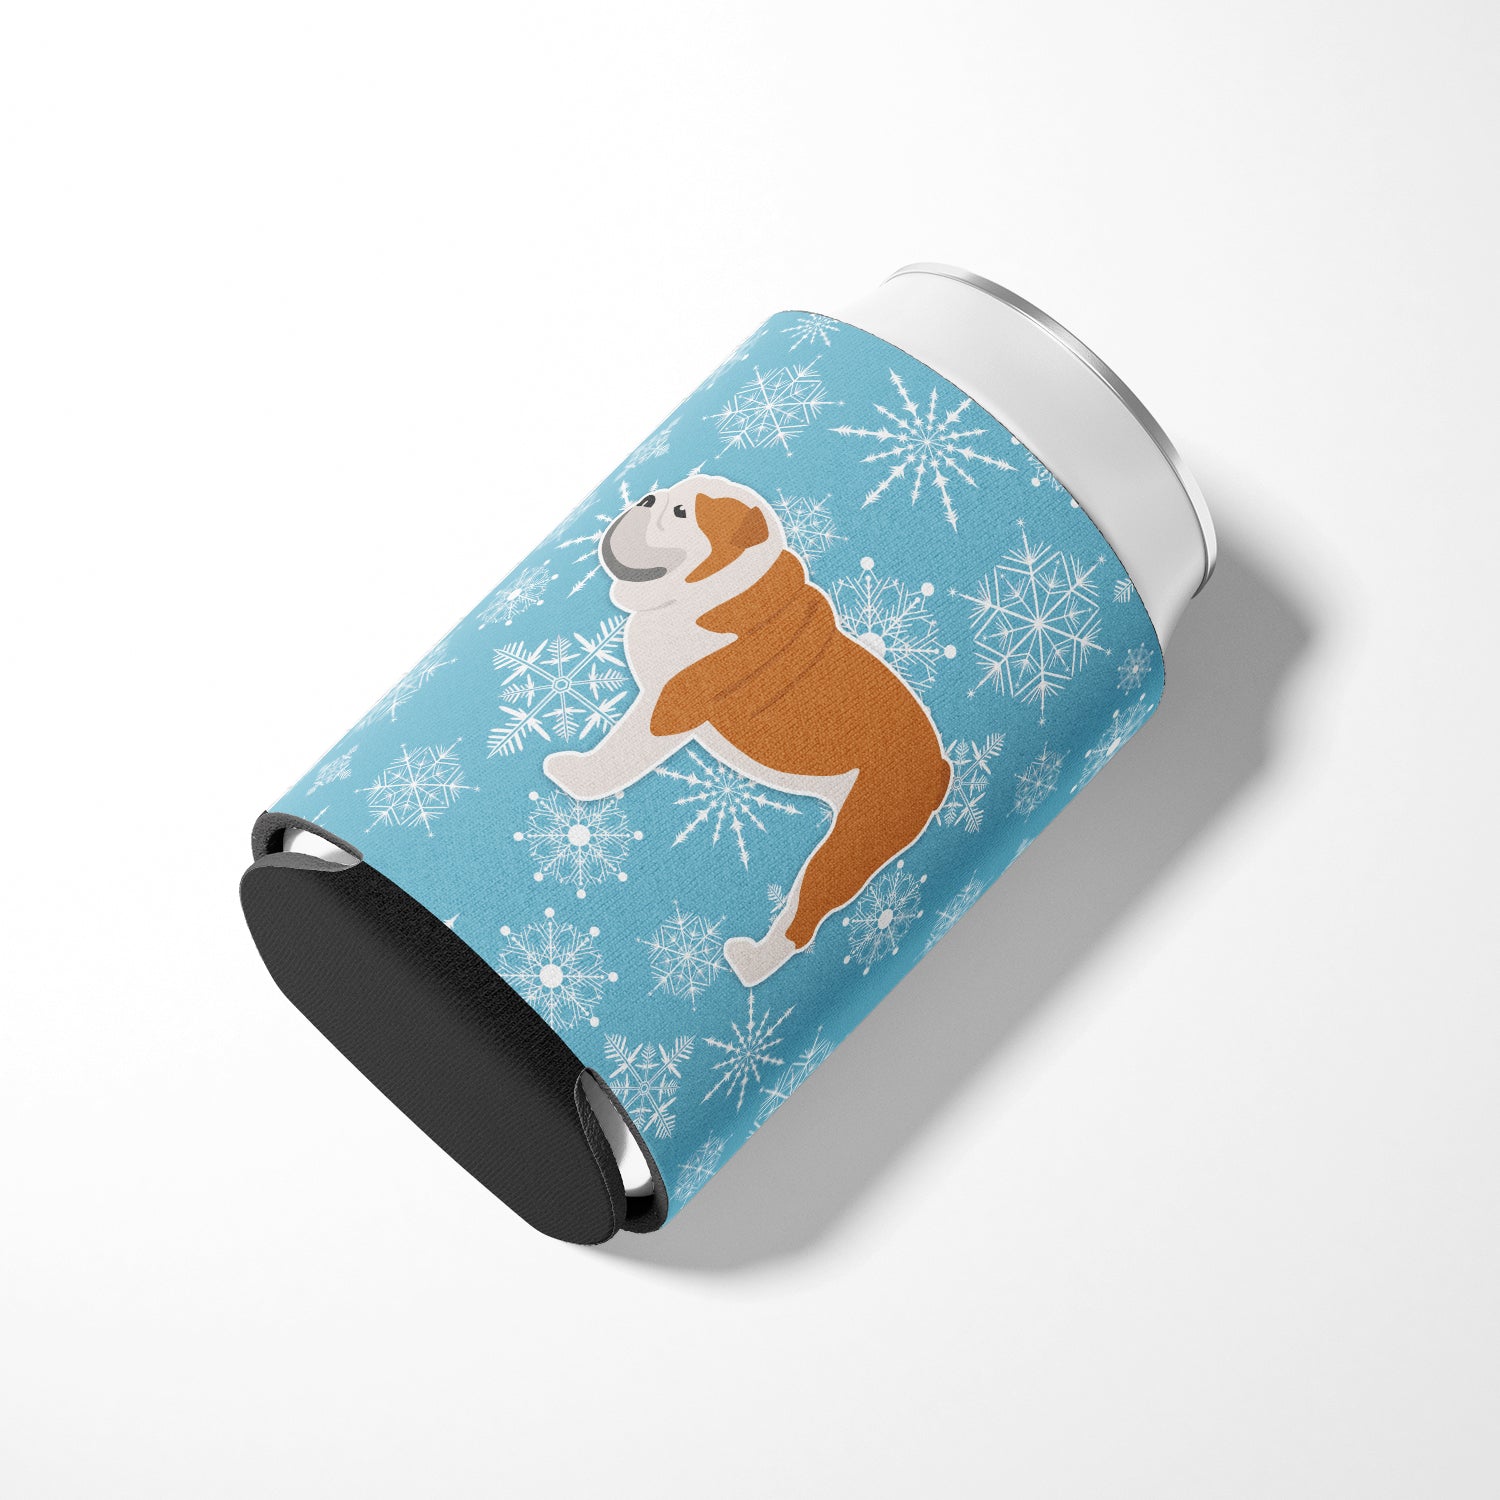 Winter Snowflake English Bulldog Can or Bottle Hugger BB3562CC